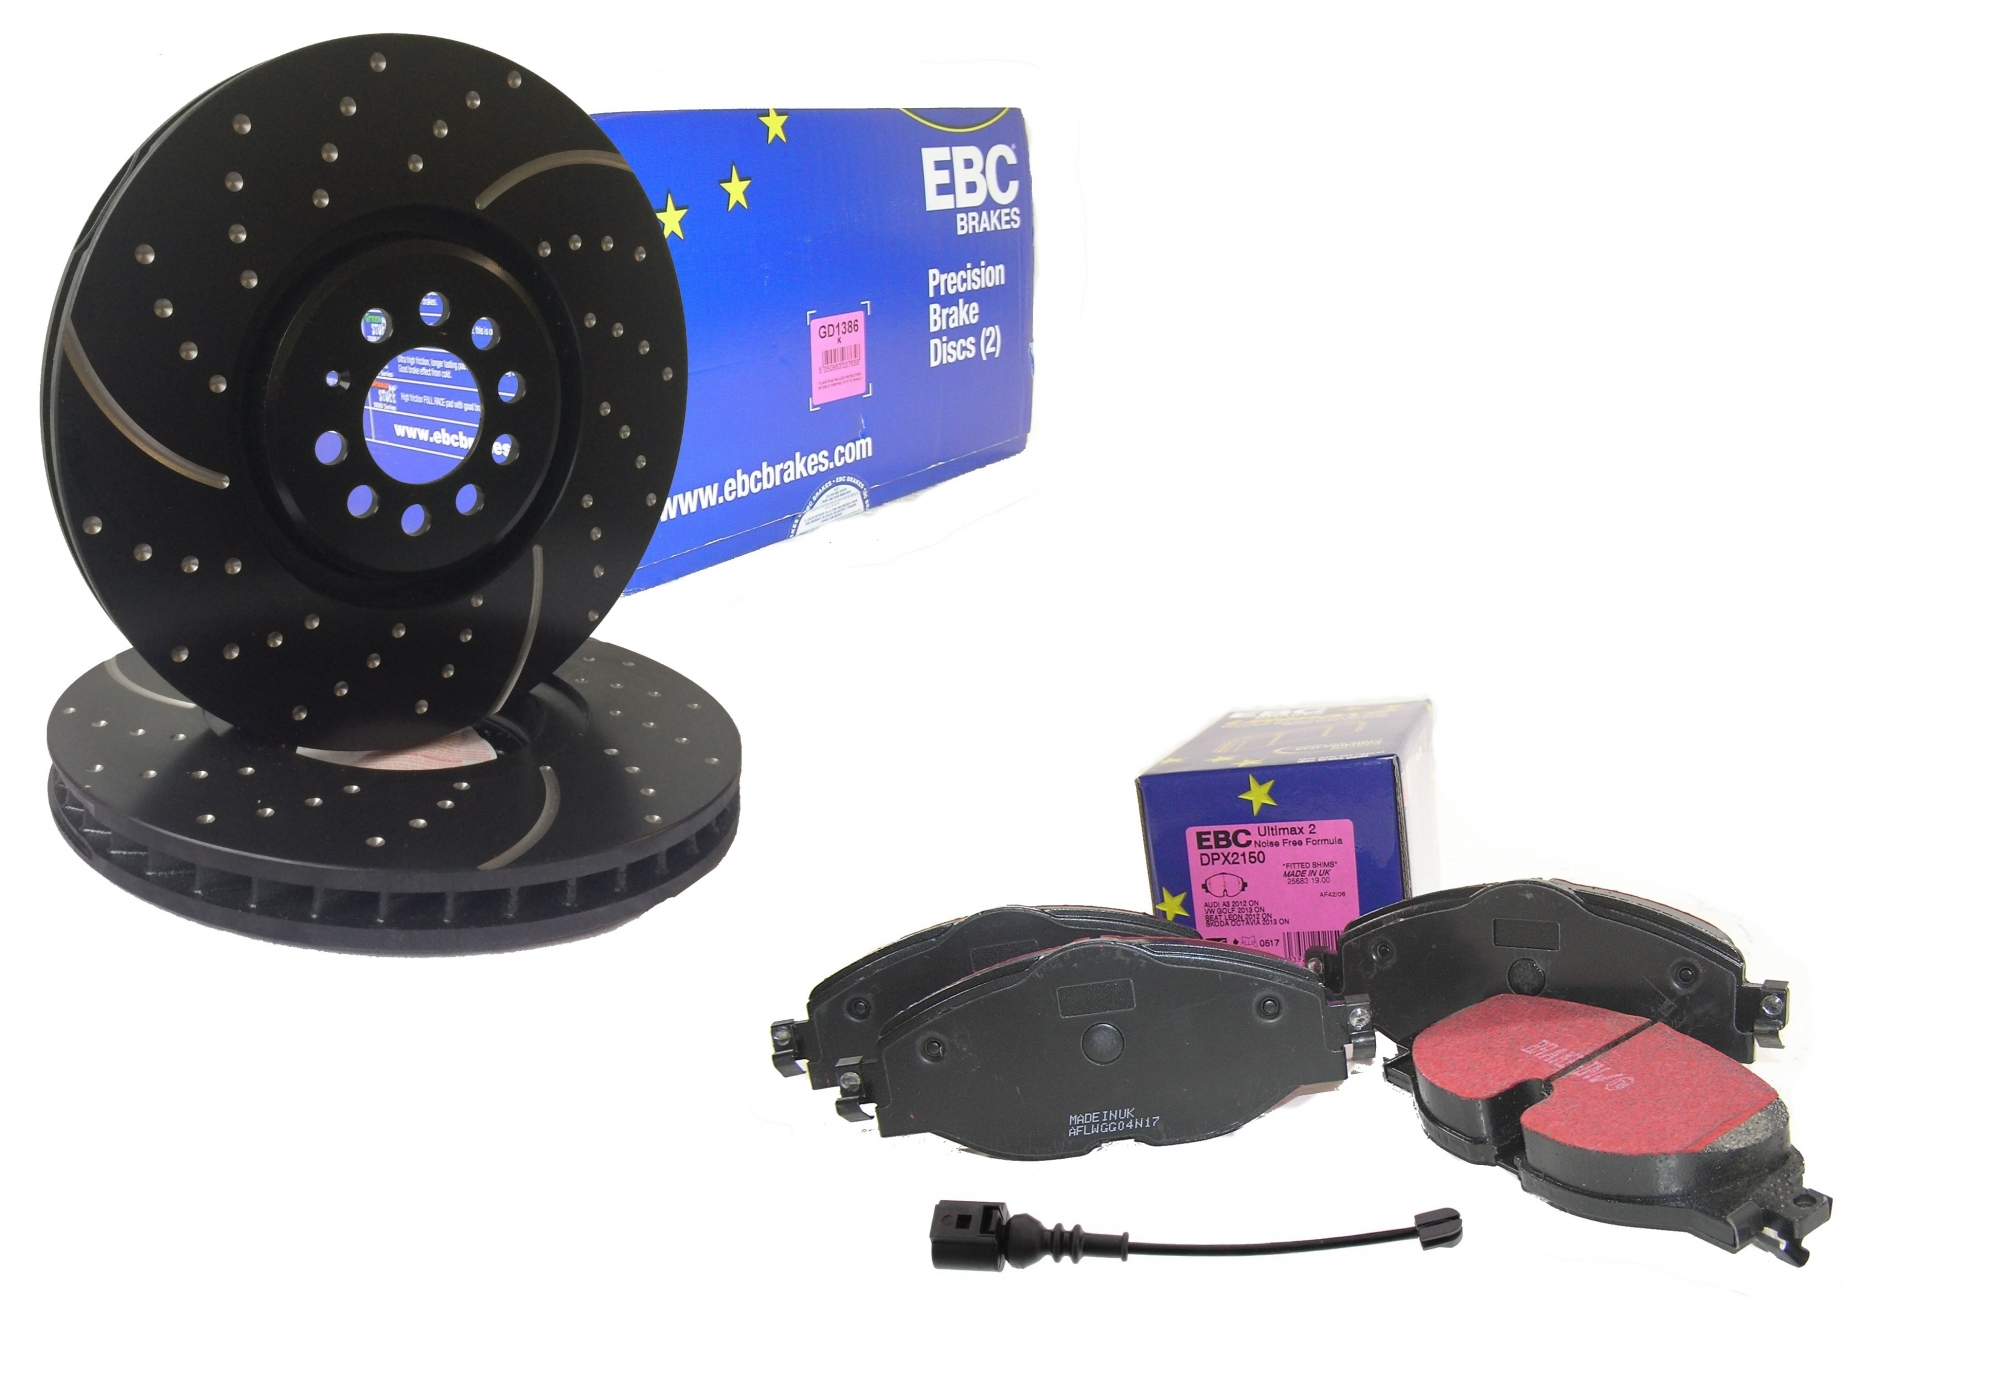 EBC-Bremsensatz, Turbo Groove Disc Black + HPS-Carbon-Bremsbelägen von MAPCO, Achssatz, VA, Audi, Seat, Skoda, VW